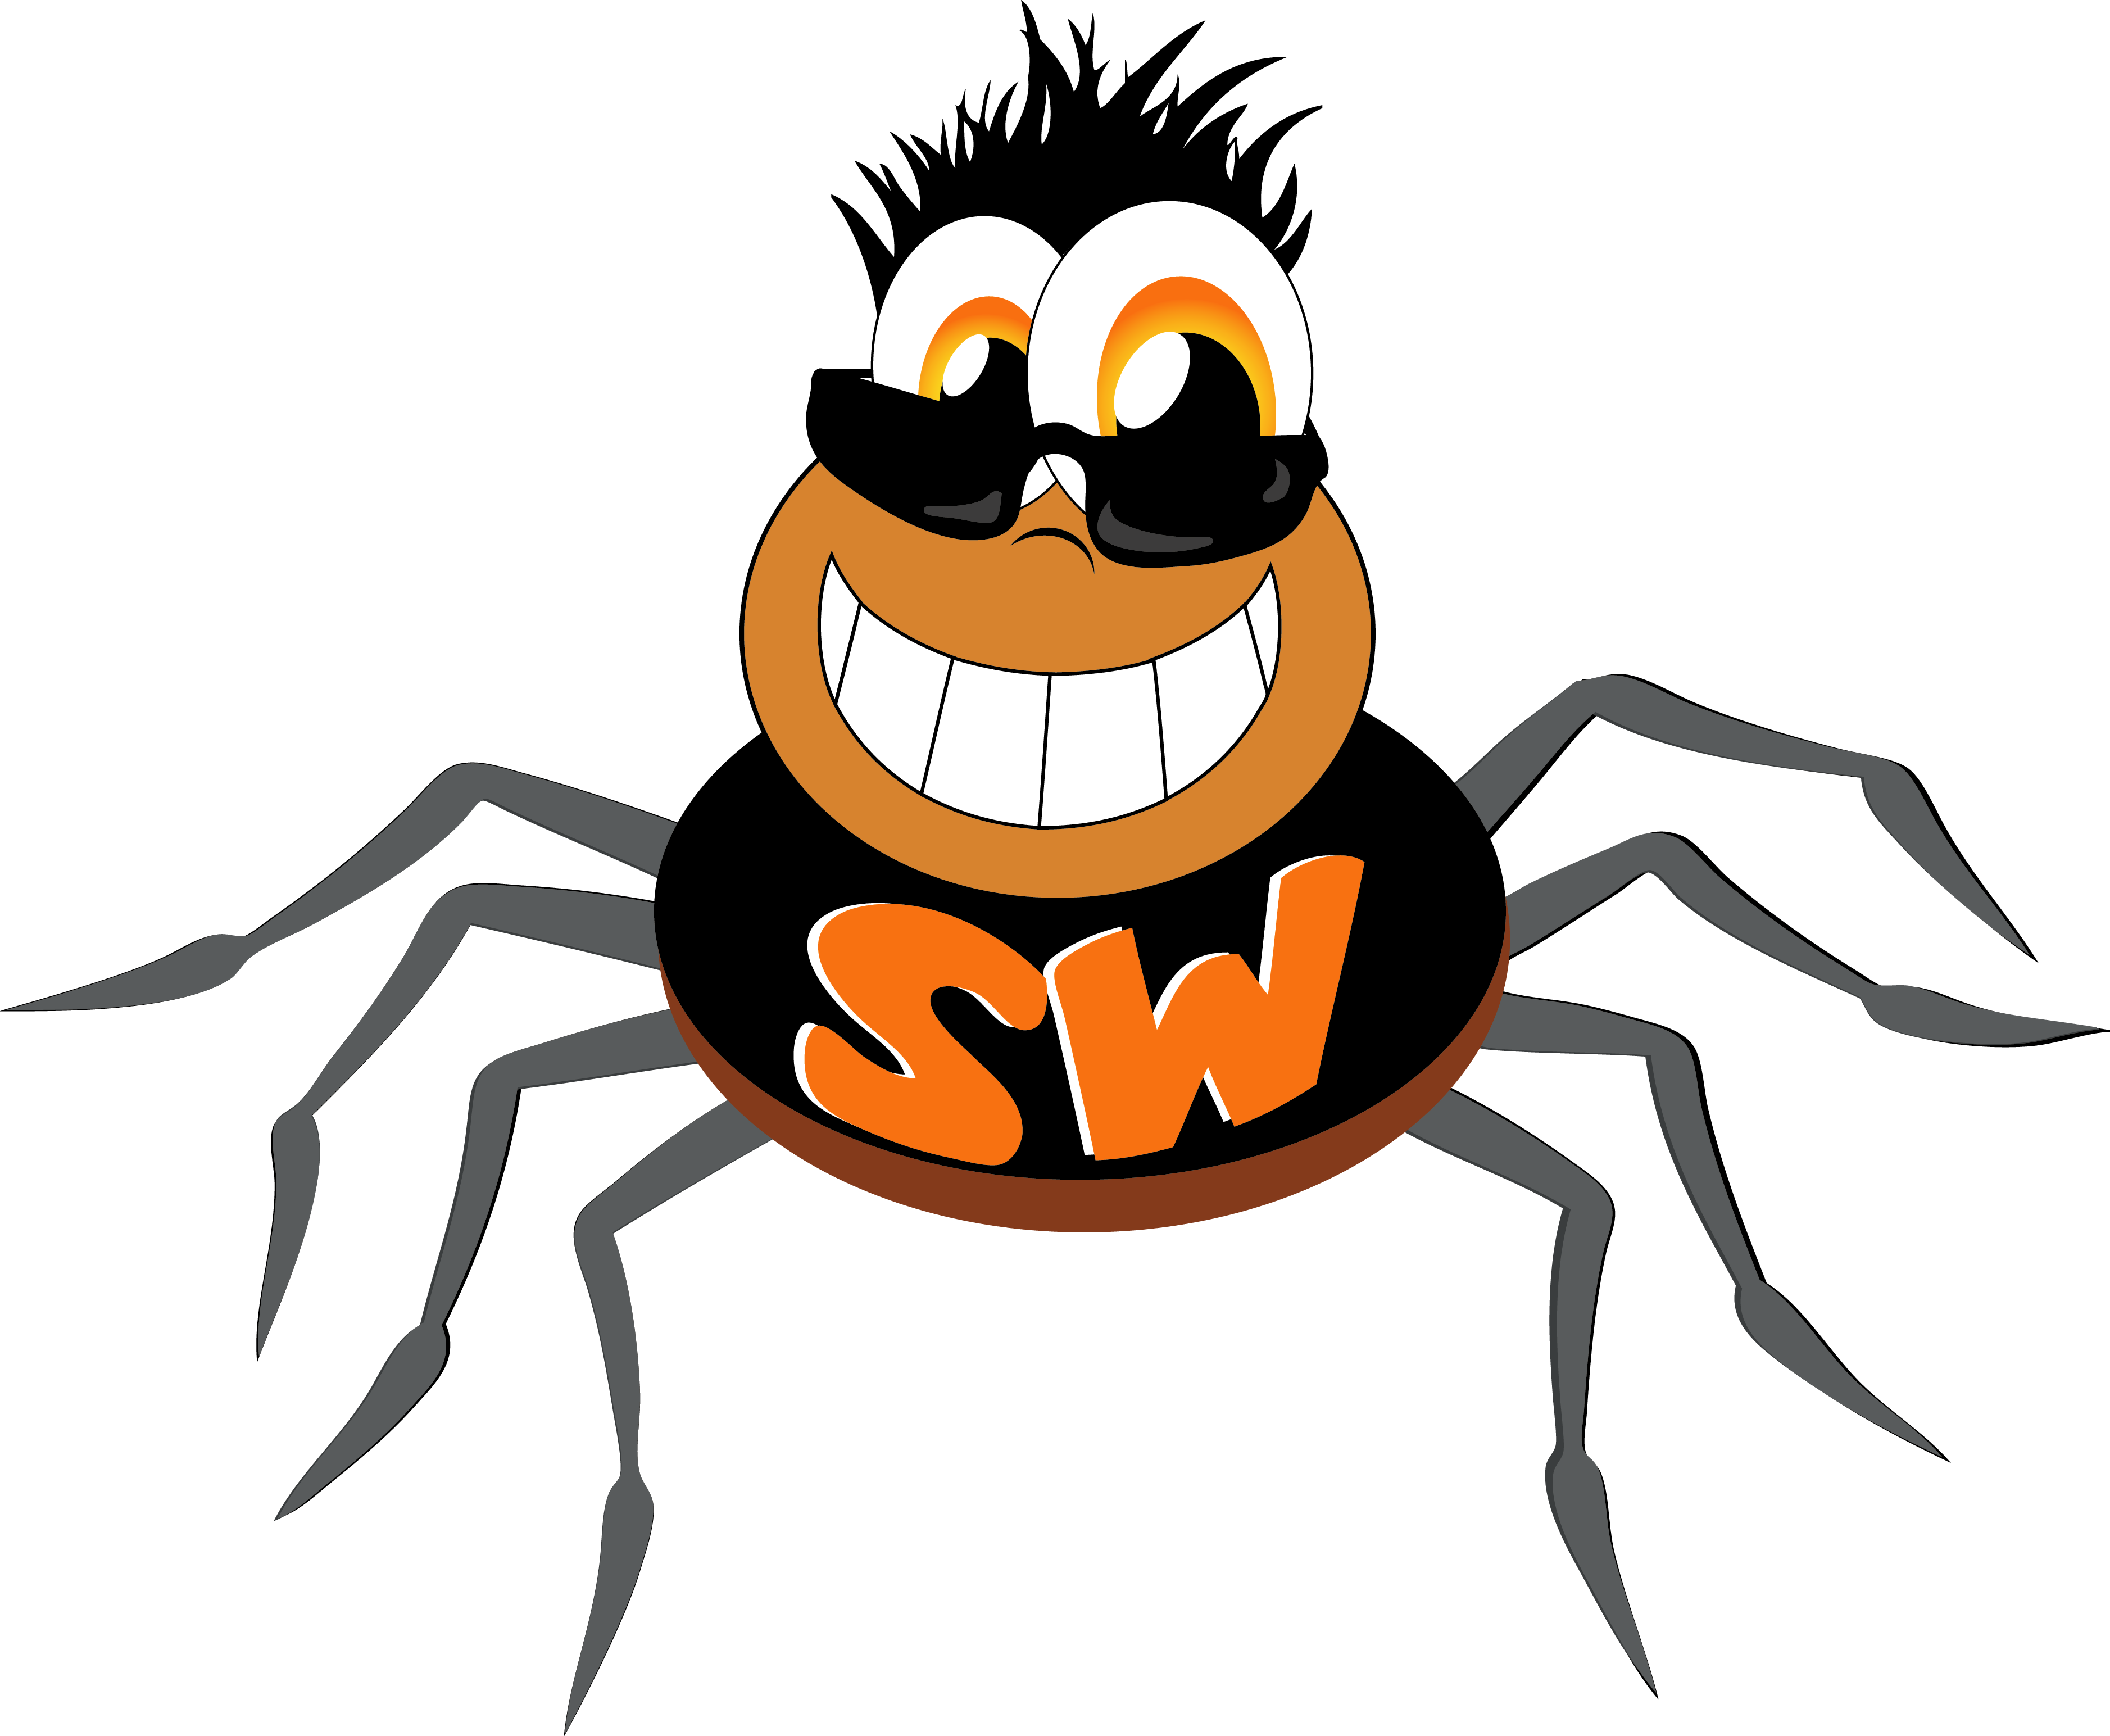 https://spiderwayne.com/wp-content/uploads/2015/10/only-spider-designcrowd_logo_printready_cmyk.png